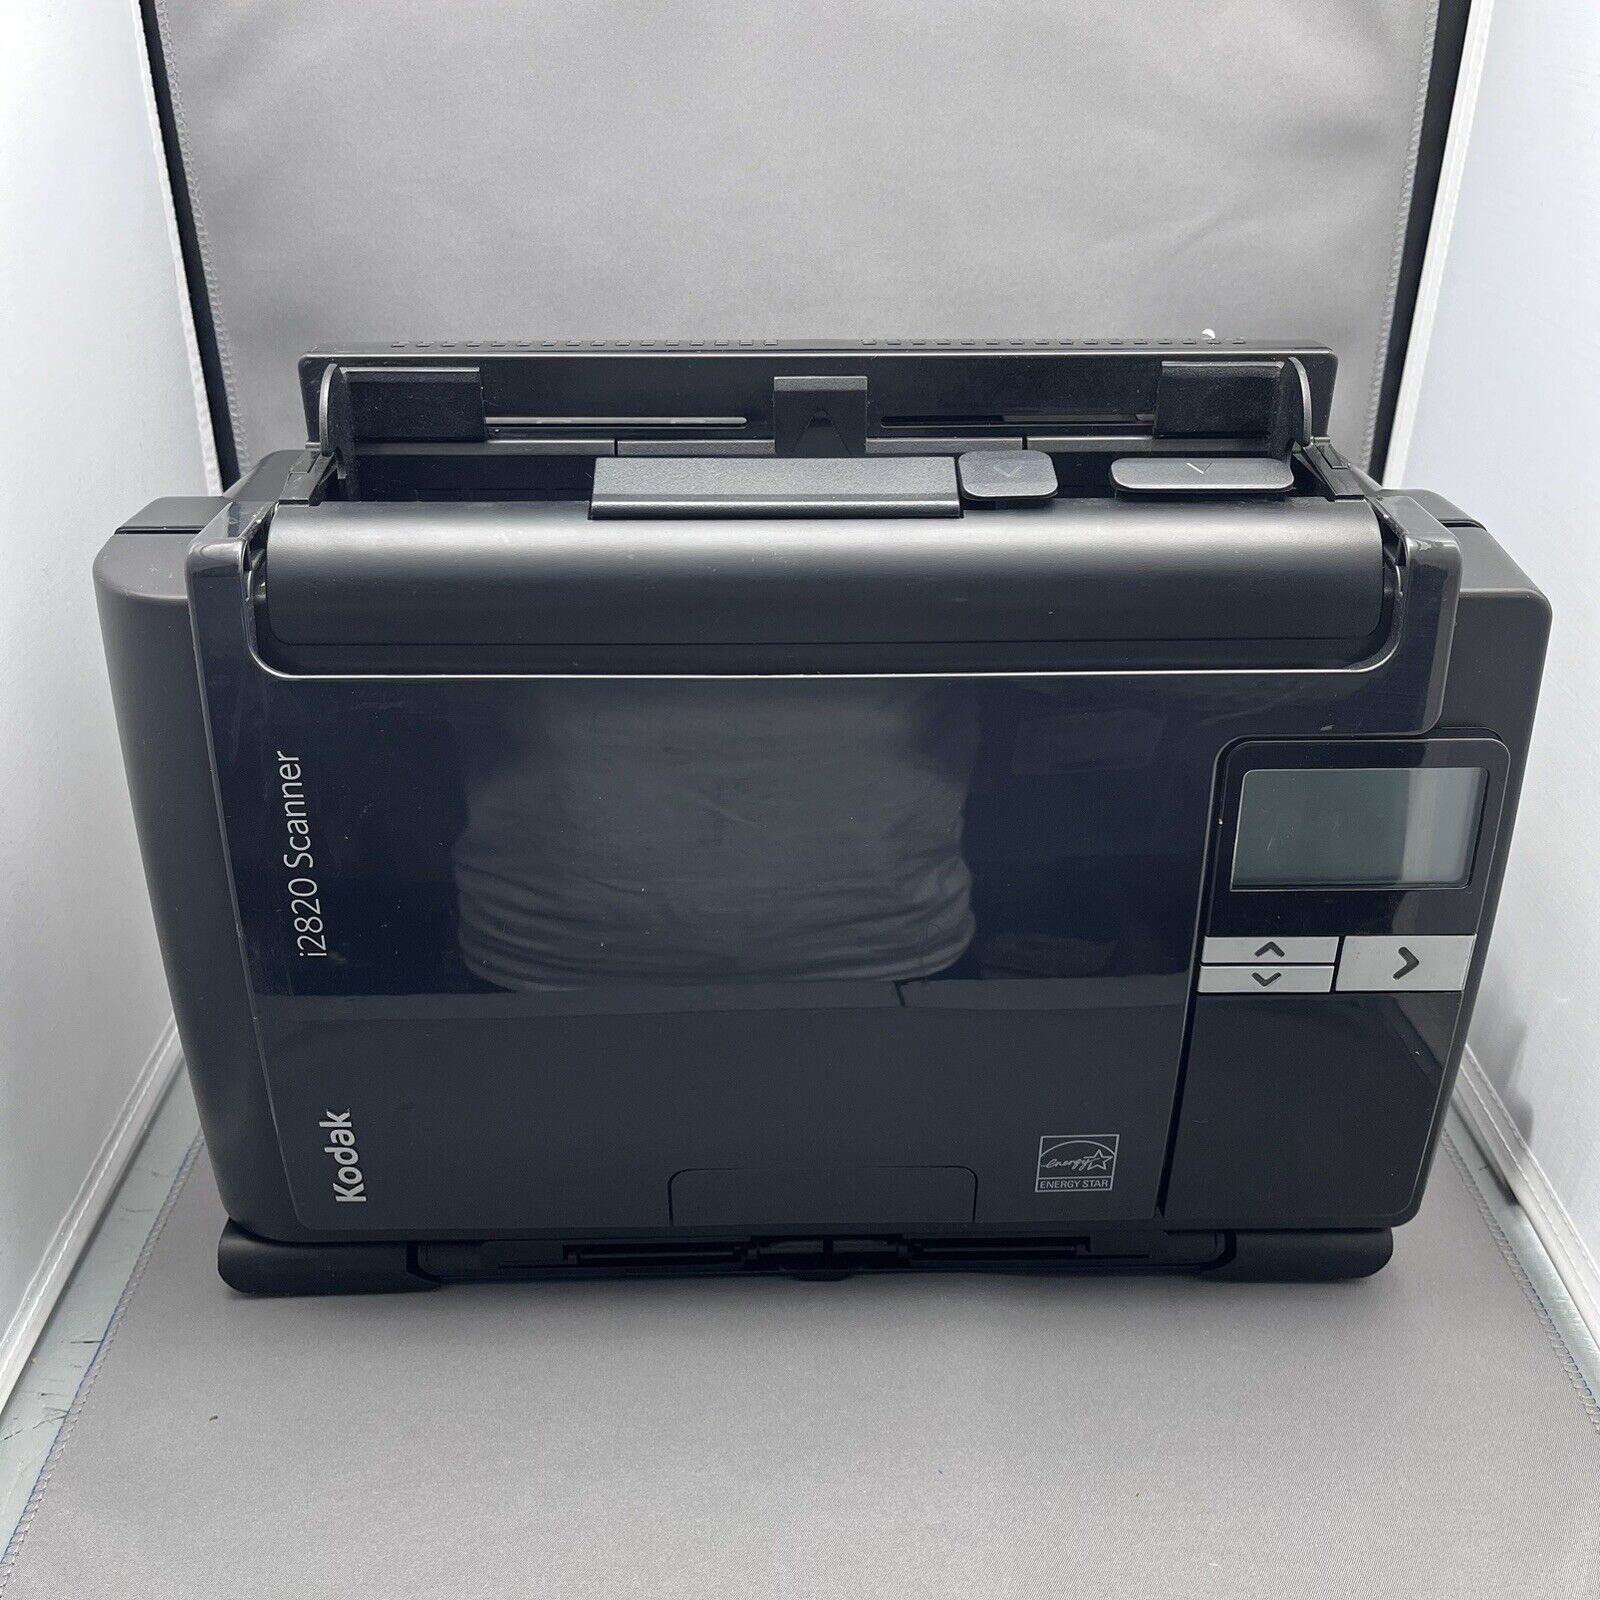 Kodak i2820 Sheetfed Color Duplex Document Scanner USB